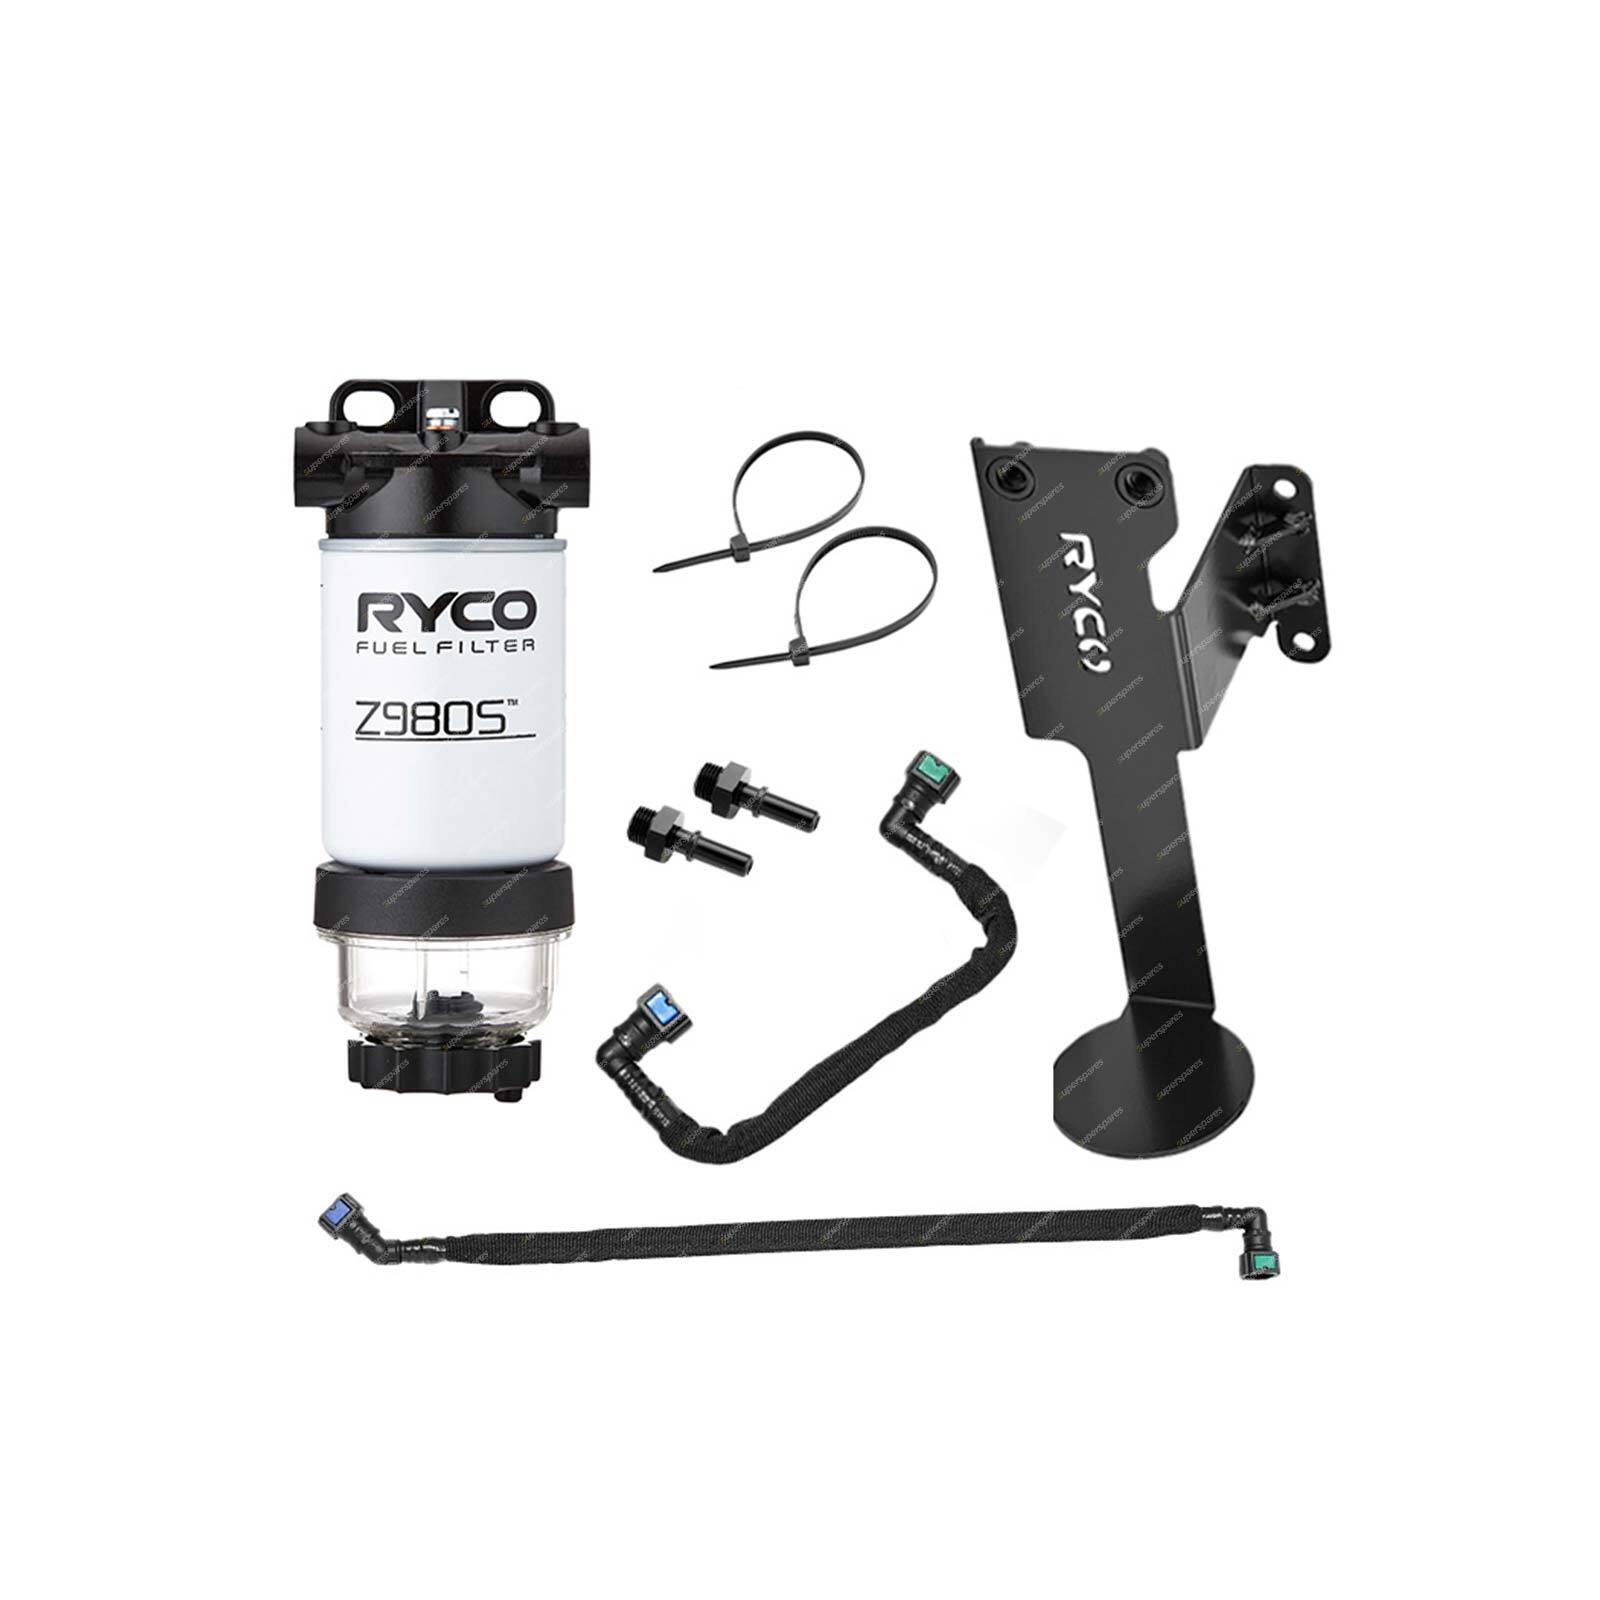 Ryco 4X4 Upgrade Fuel Water Separator Kit - X120FW Brand New Genuine Performance